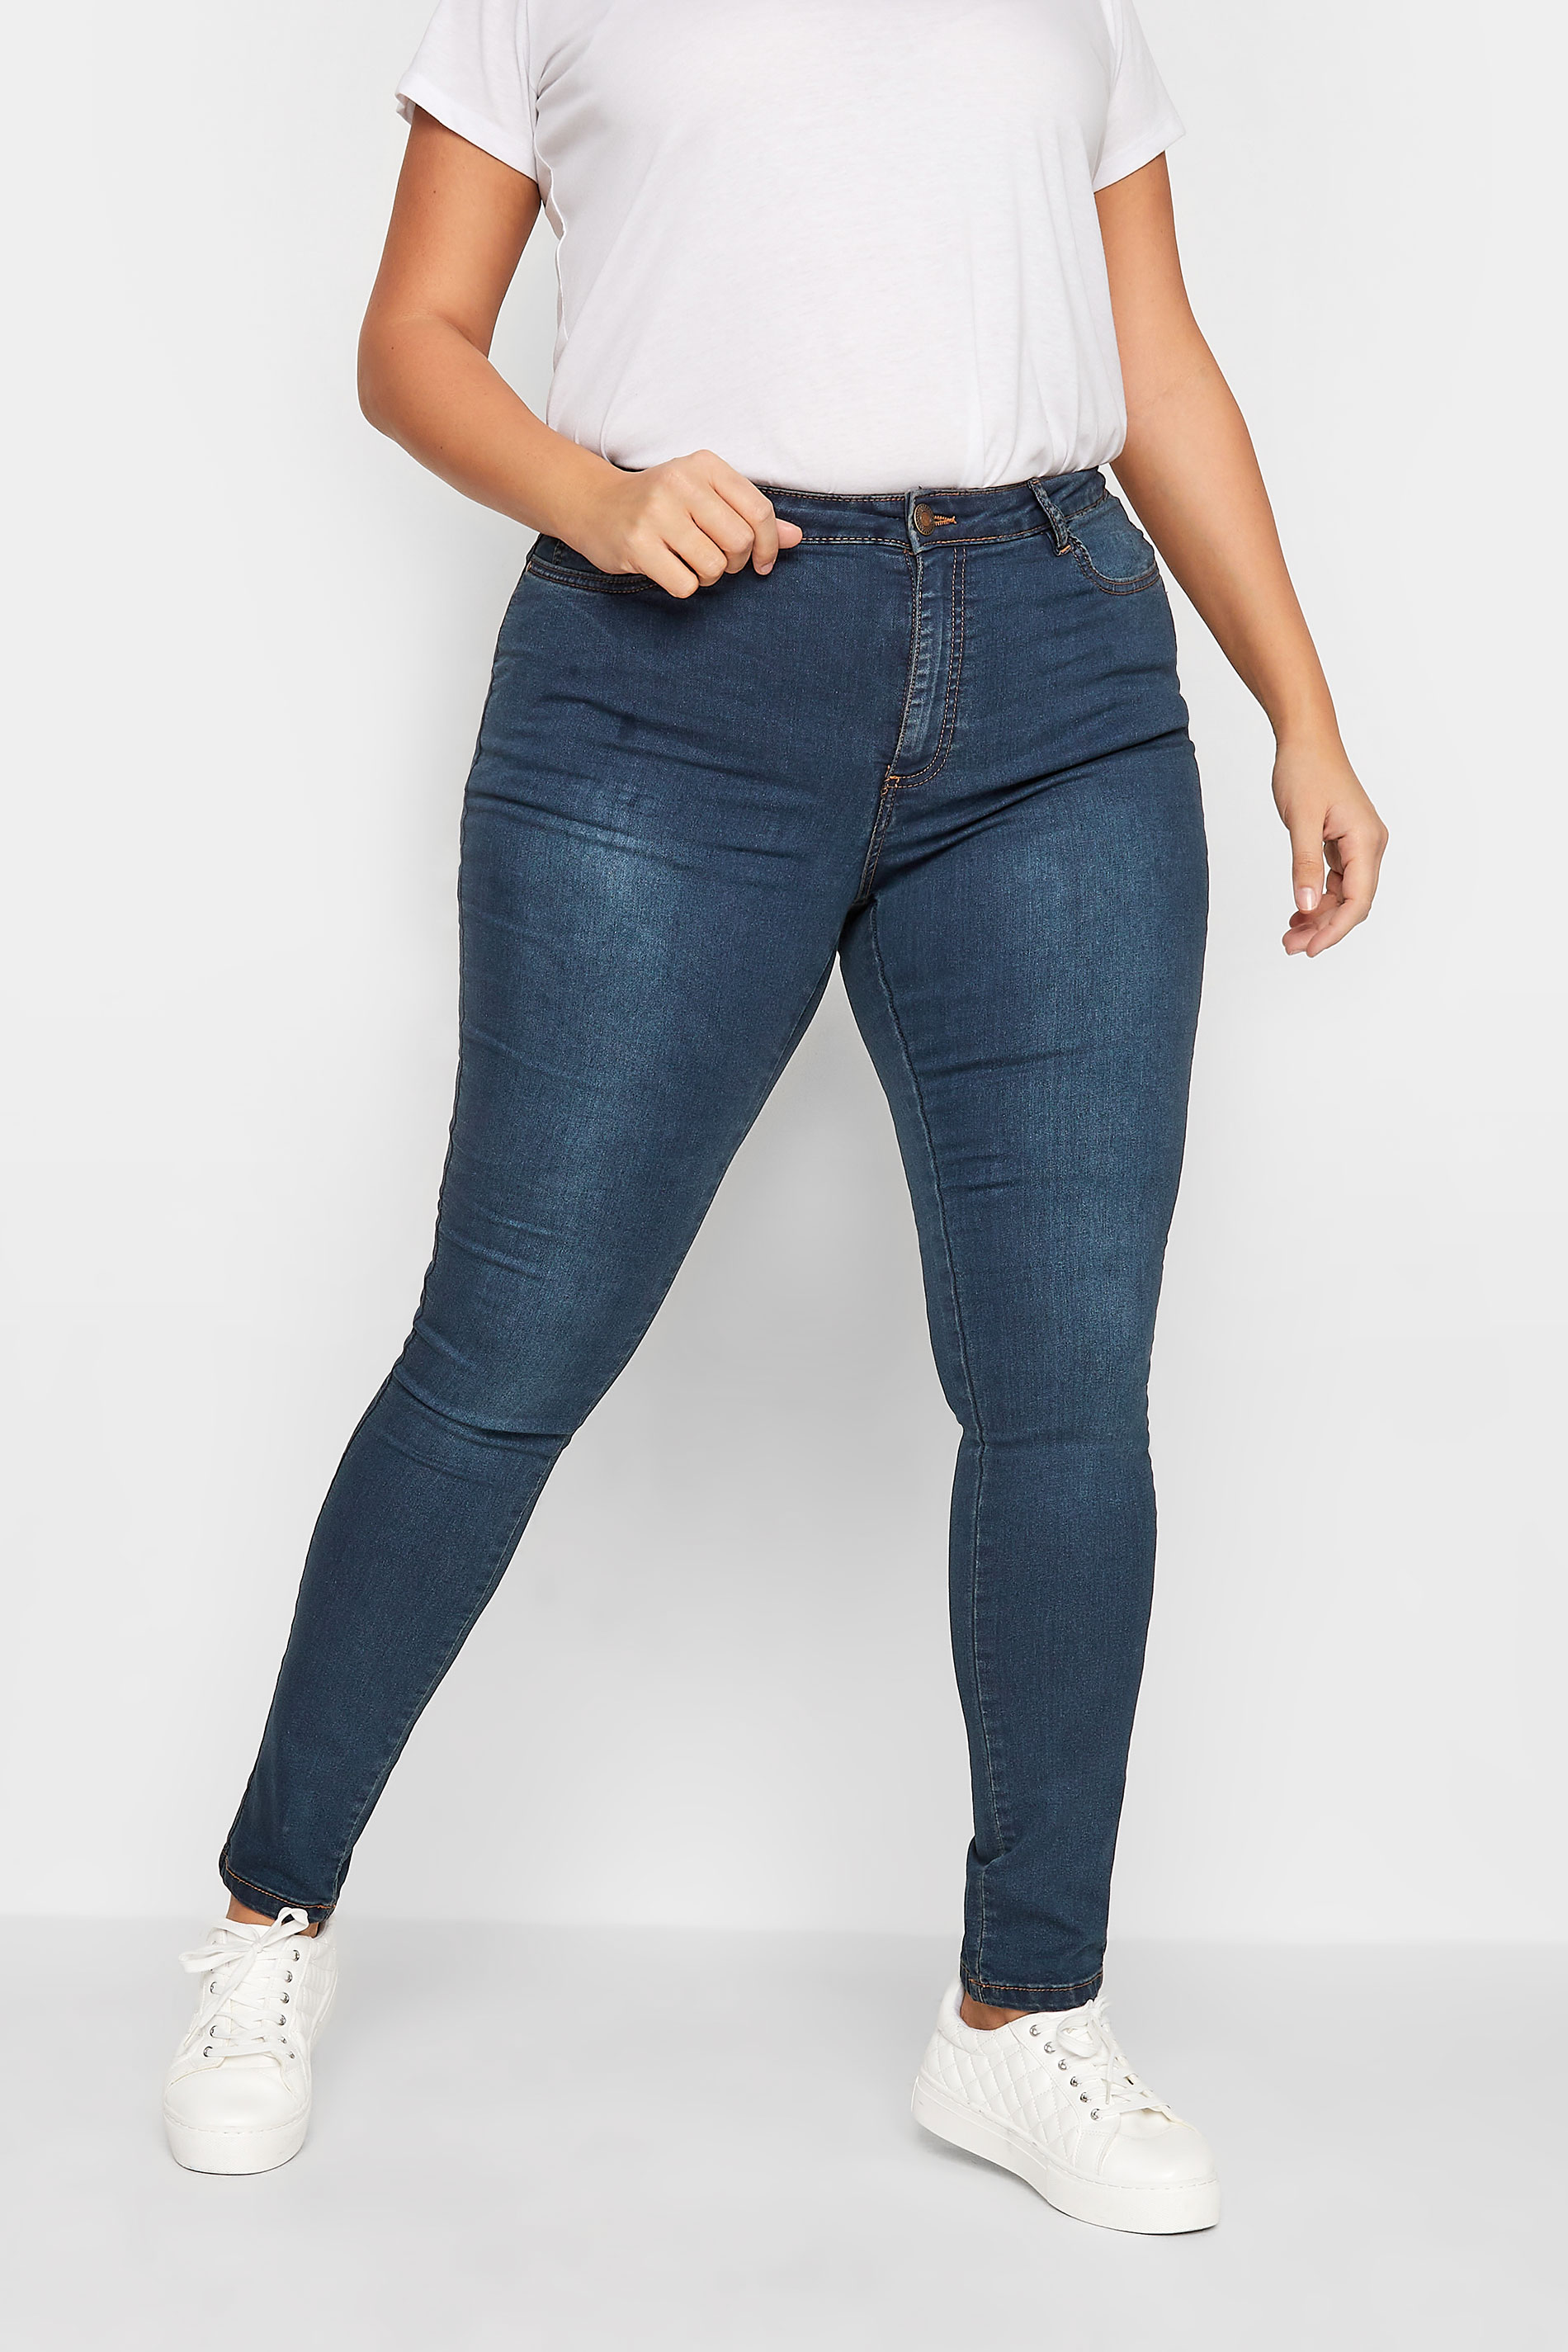 LTS Tall Women's Indigo Blue Skinny Stretch AVA Jeans | Long Tall Sally 1